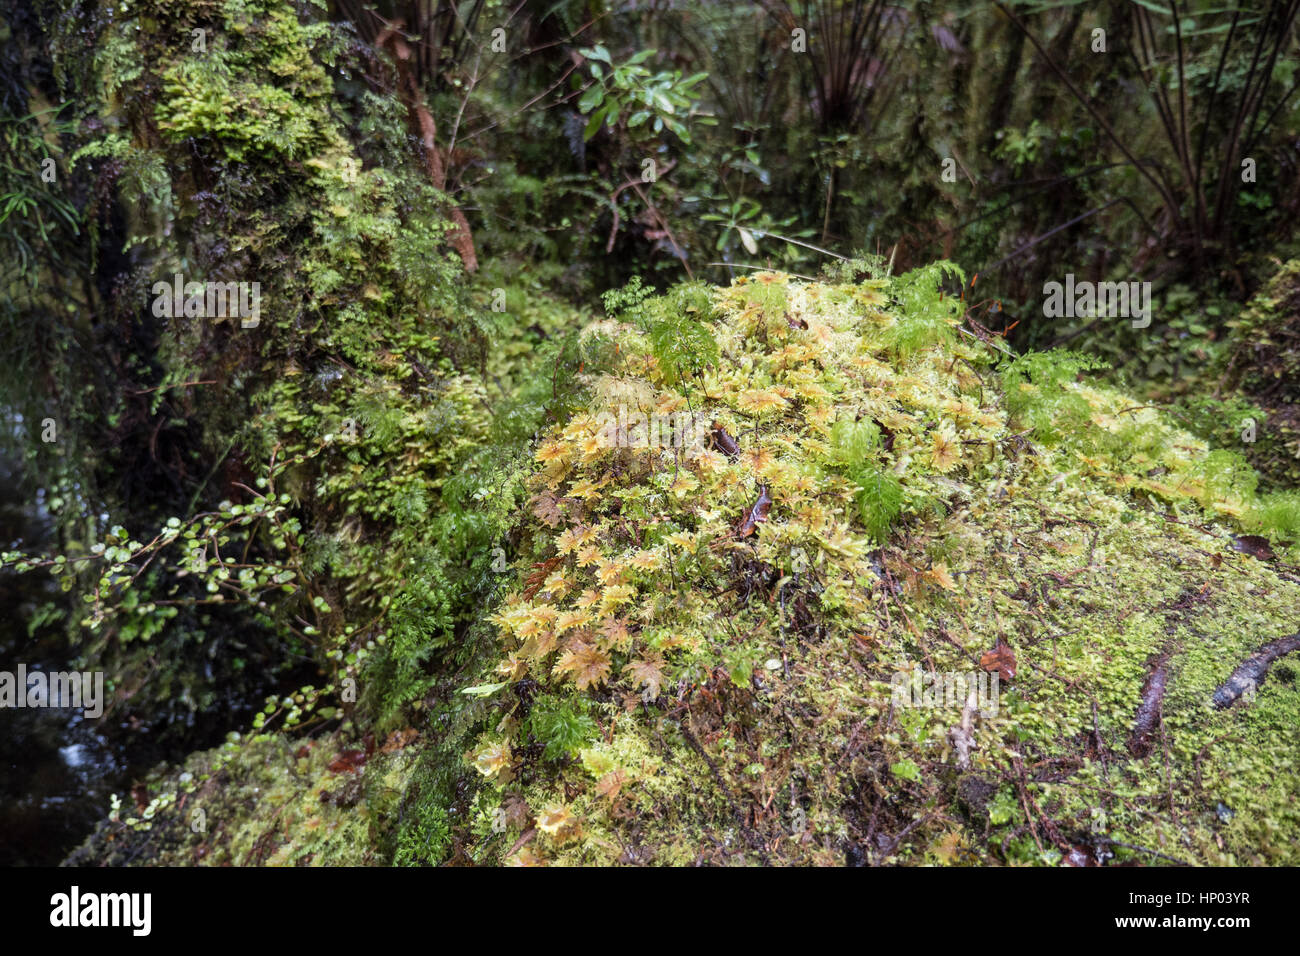 Ship Creek and Kahikatea swamp forest, Haast Highway, South Island, New Zealand. Stock Photo